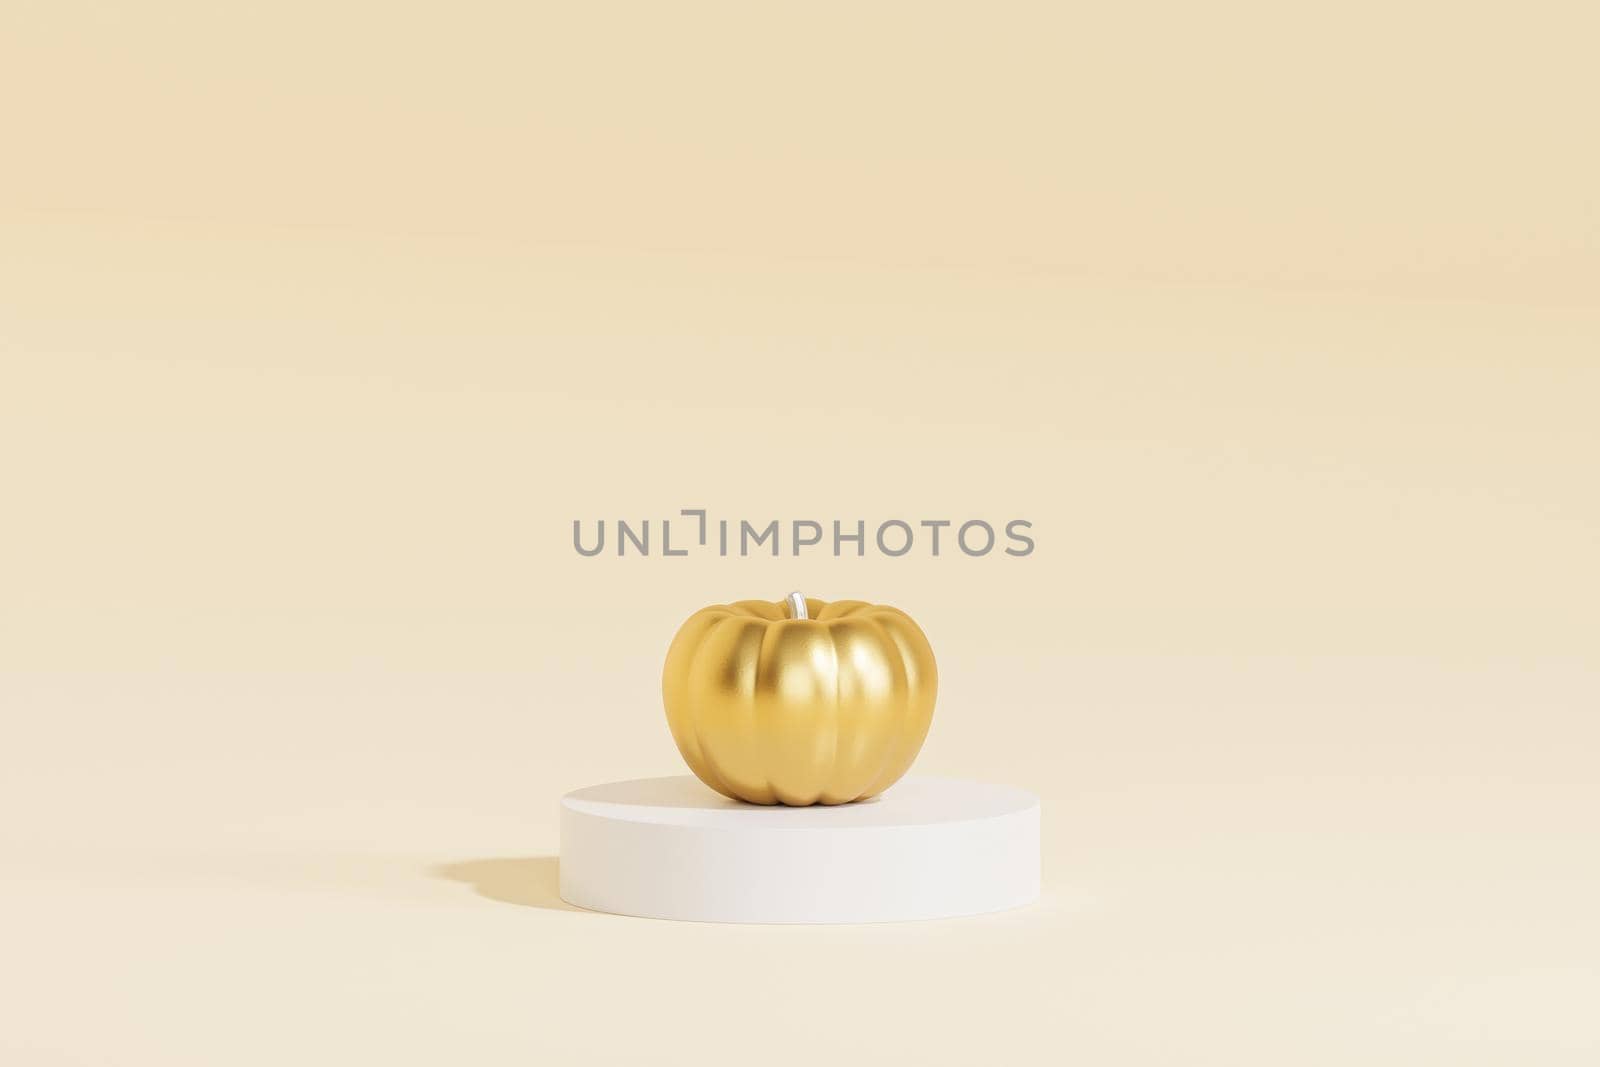 Golden pumpkin on beige background for advertising on autumn holidays or sales, 3d render